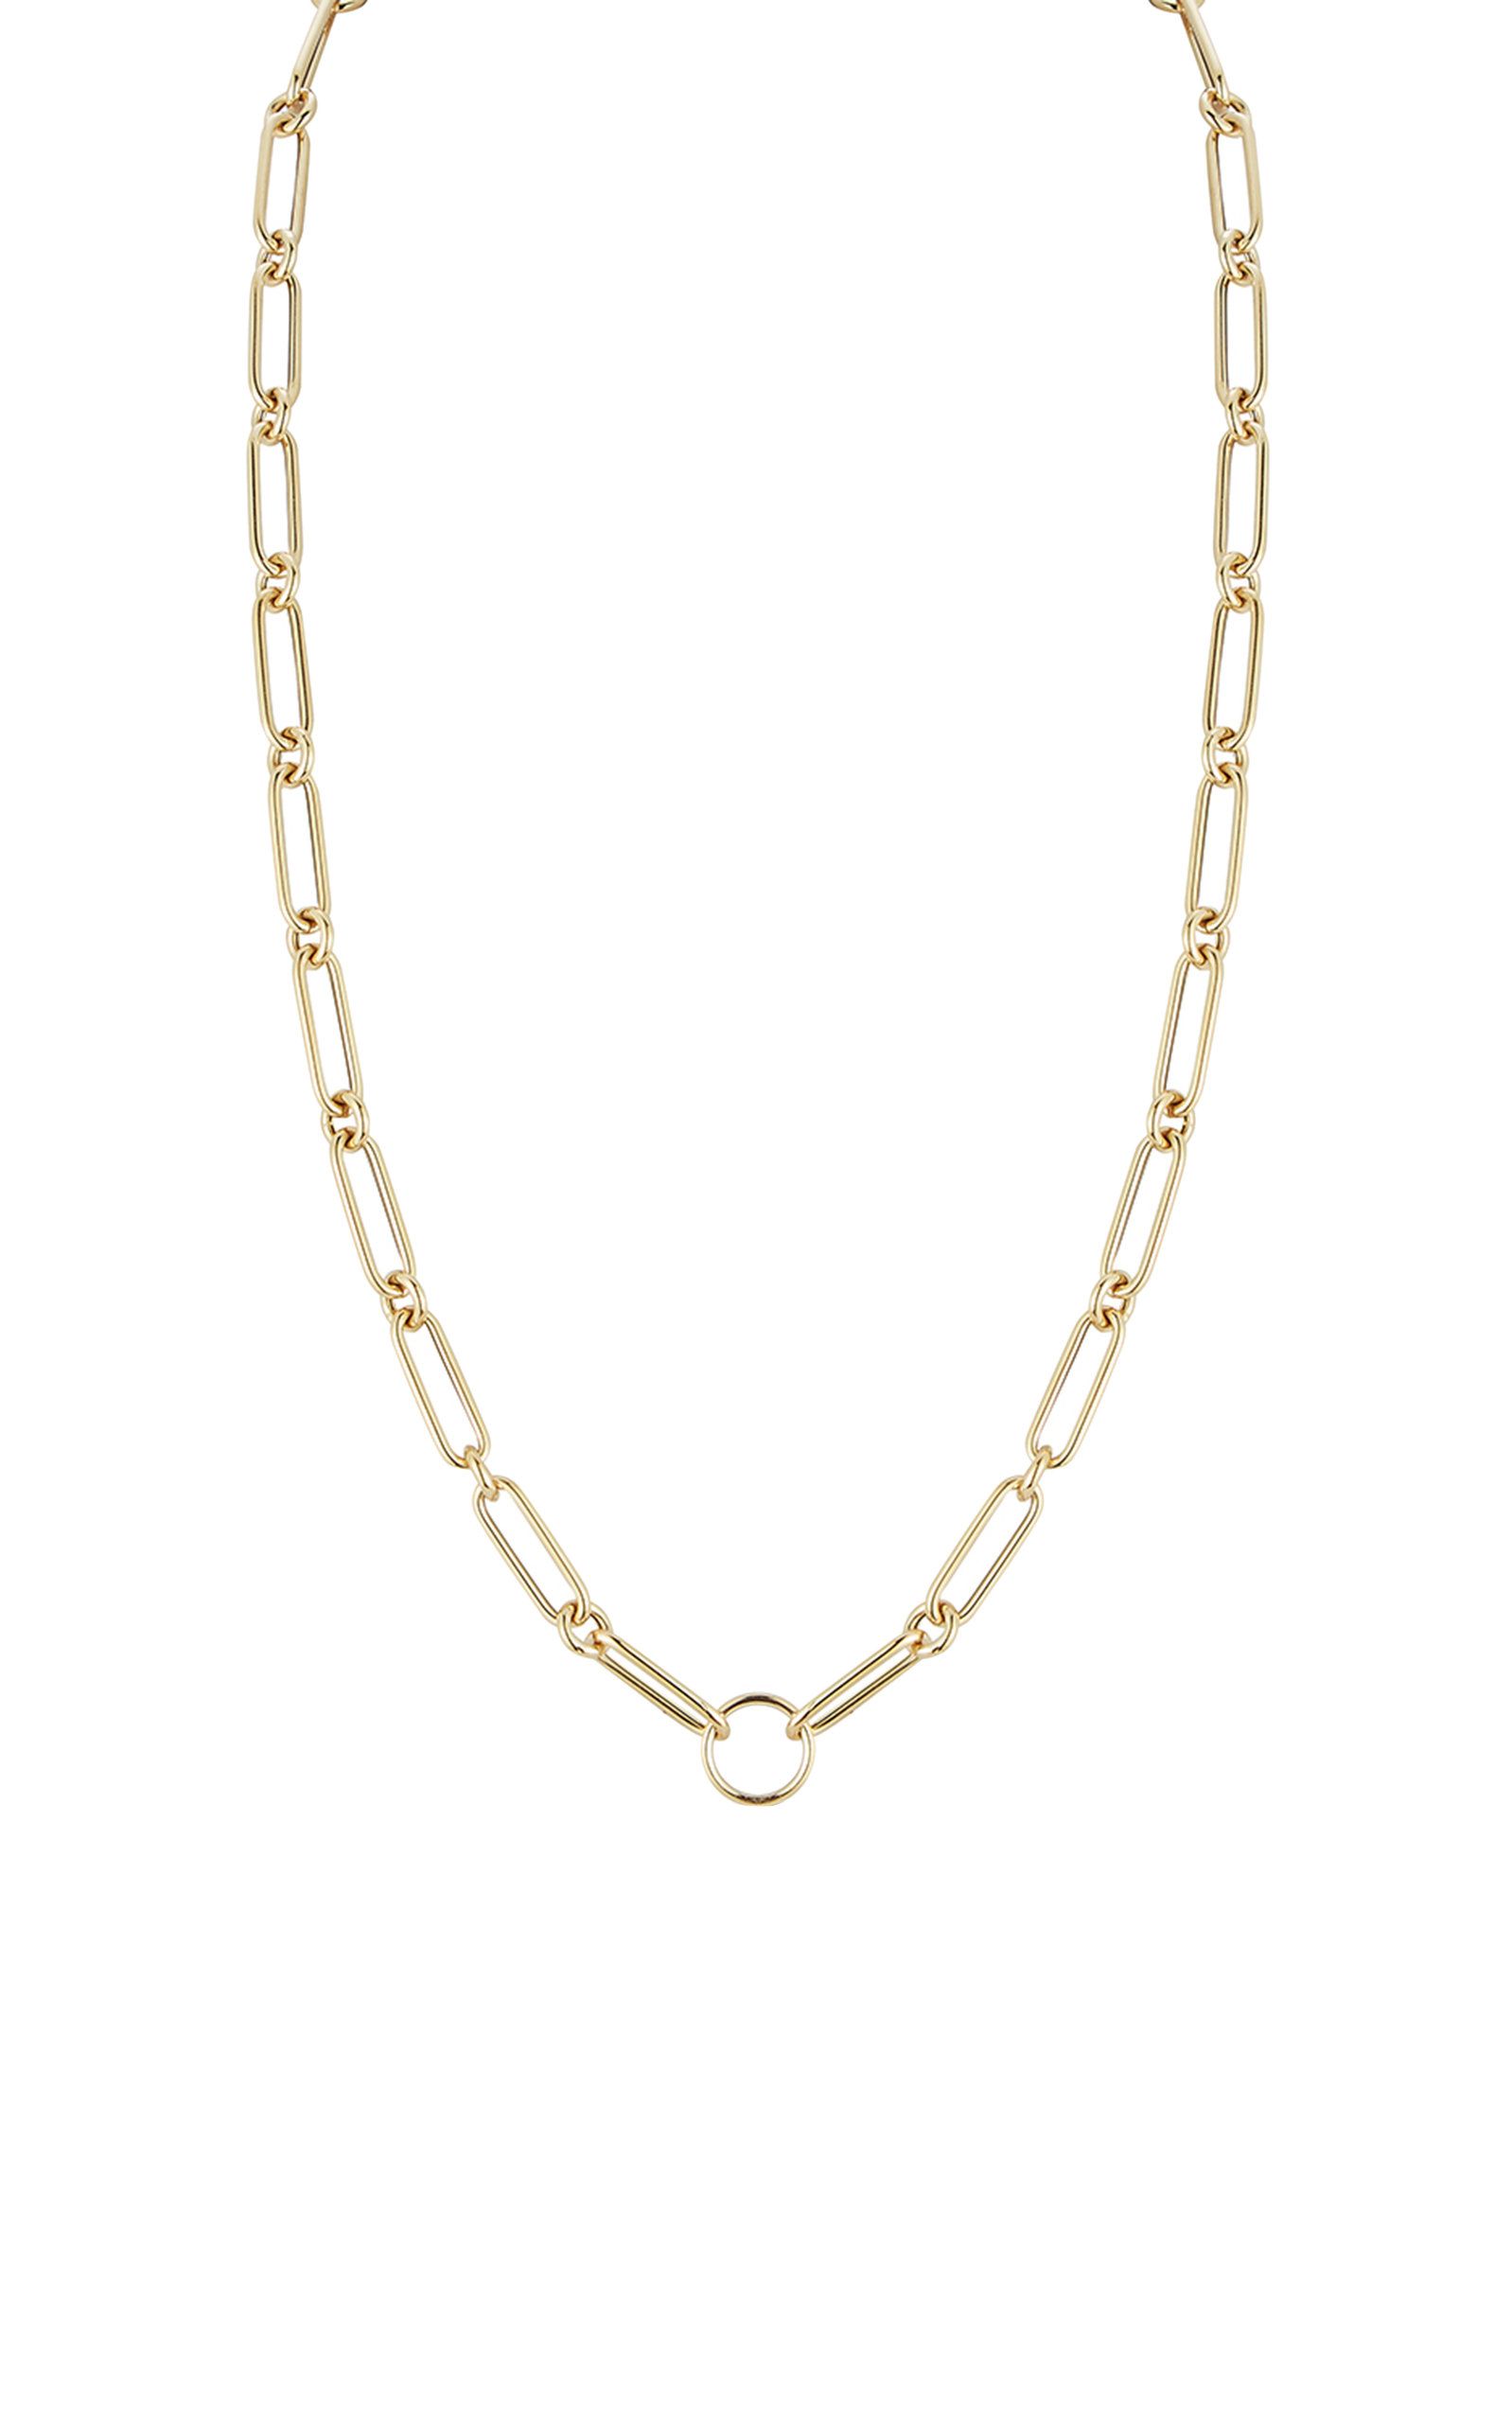 RENNA - Women's Vesper 18K Gold Chain Necklace - Gold - Moda Operandi - Gifts For Her | Moda Operandi (Global)